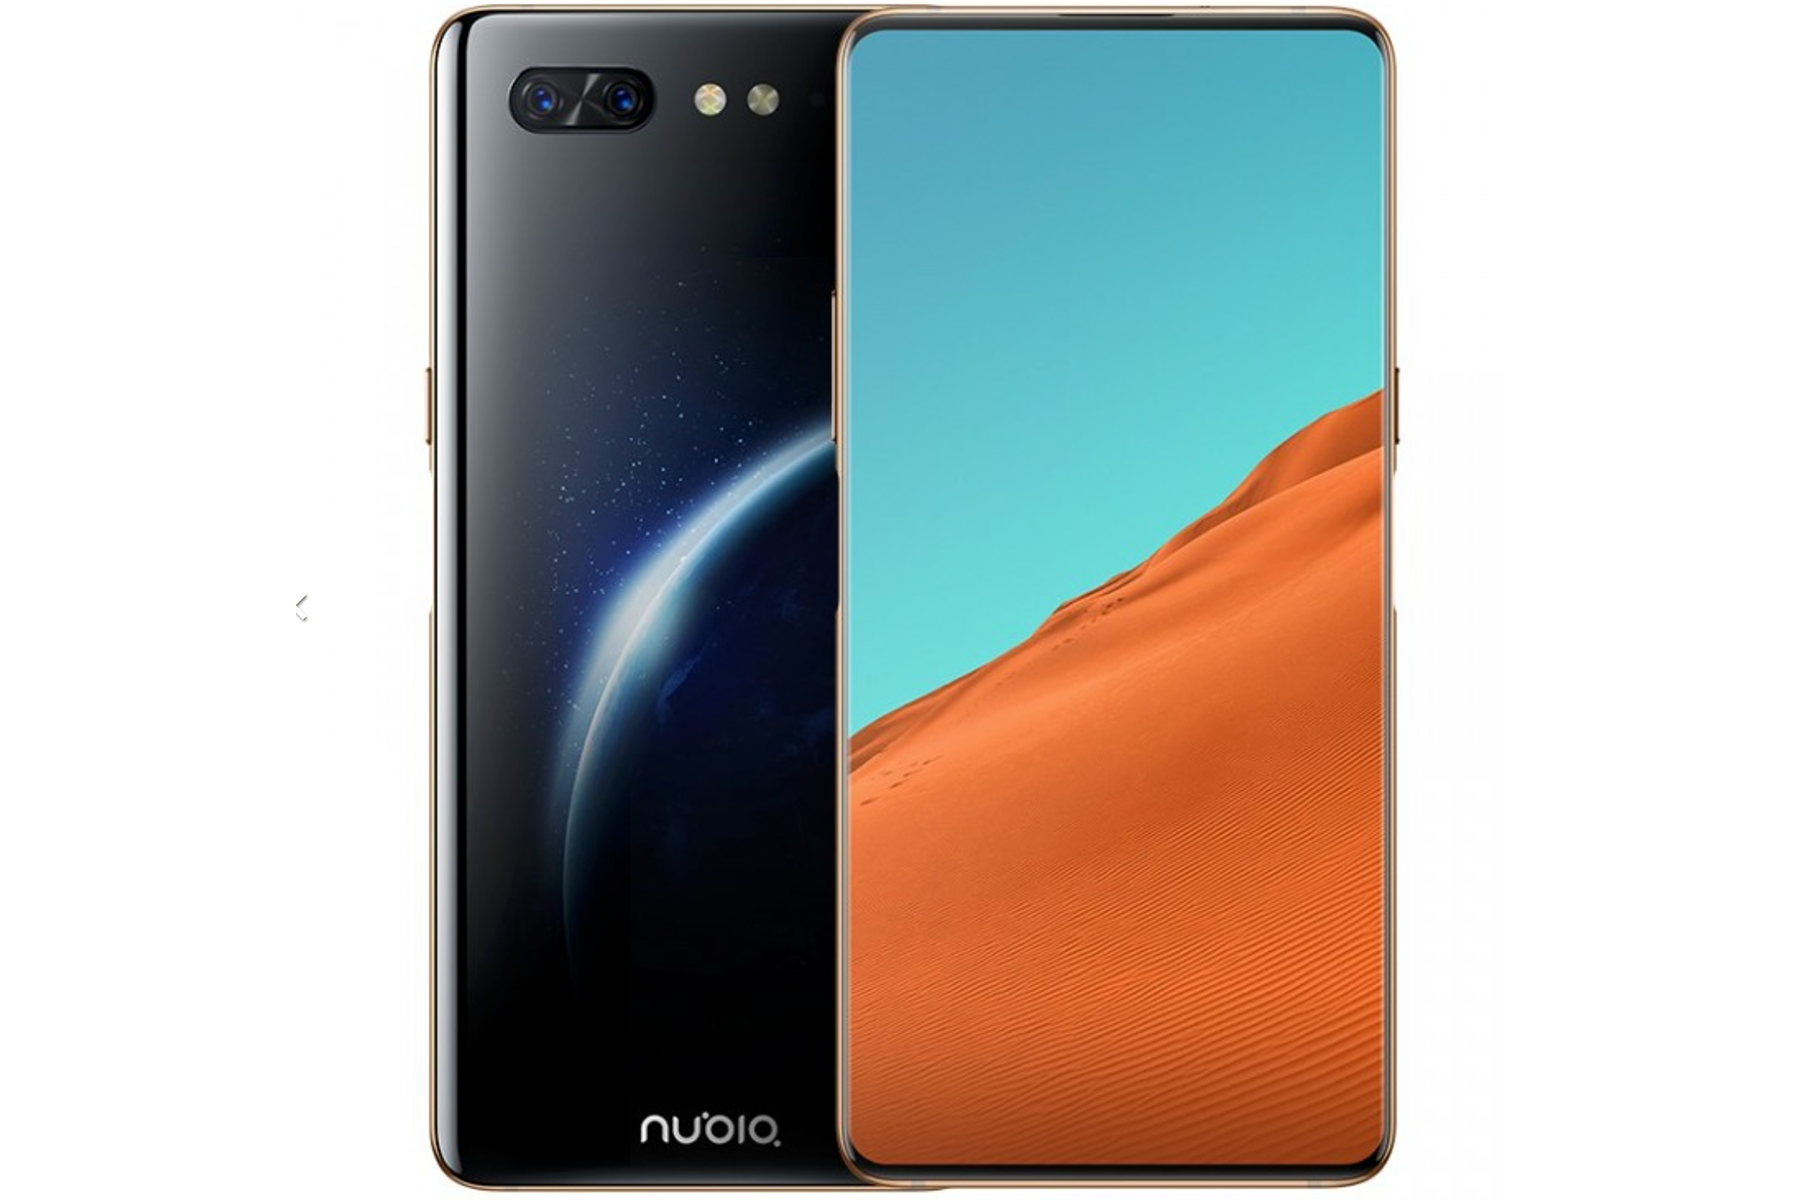 Nubia X: a Dual-Display Smartphone with No Selfie Camera